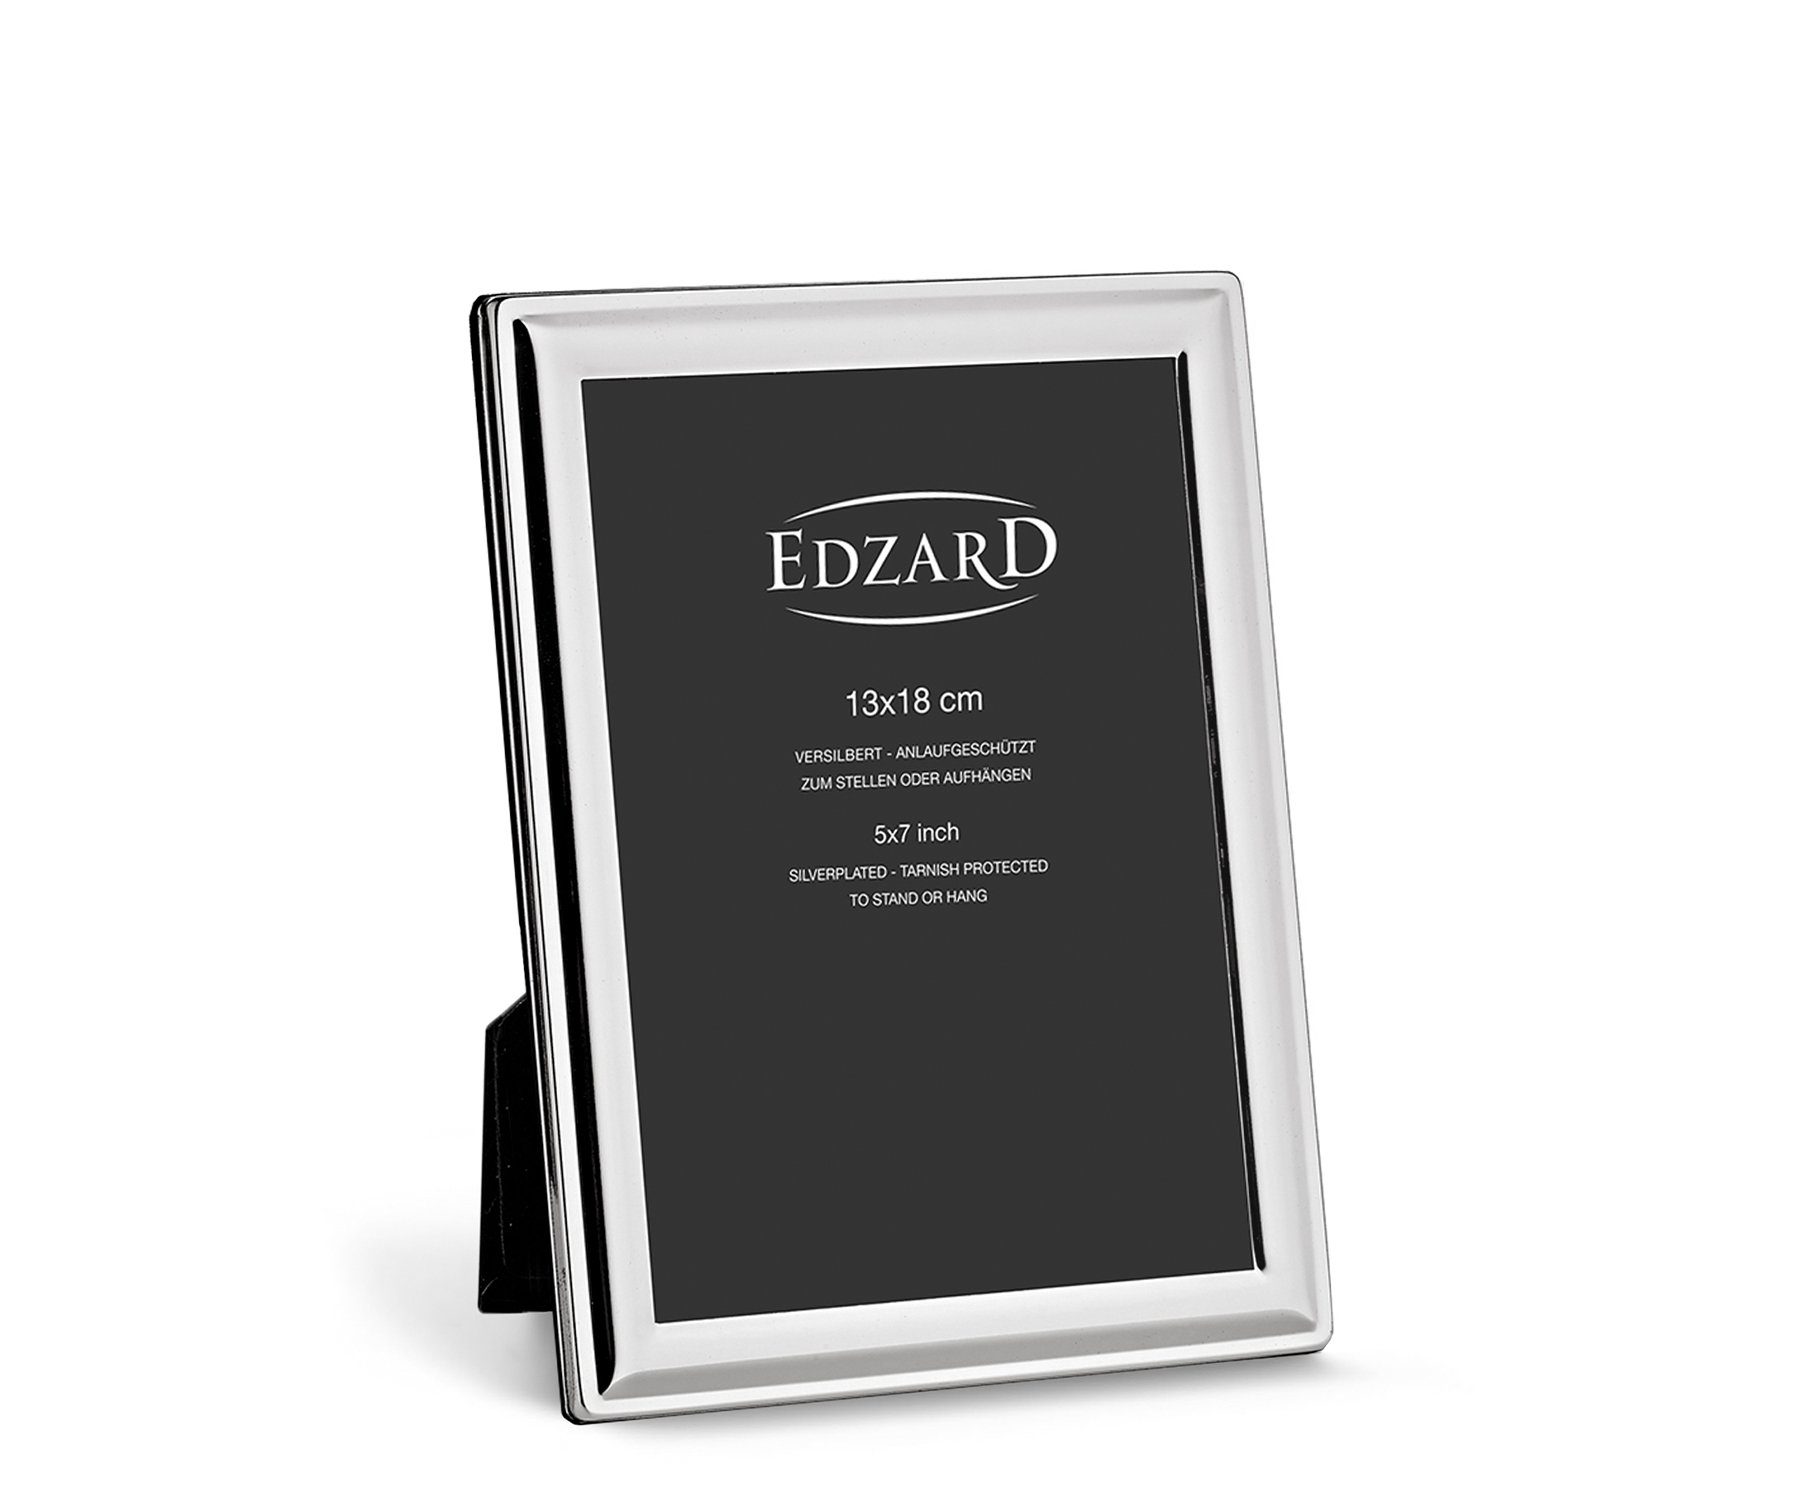 EDZARD Bilderrahmen Terni, versilbert & anlaufgeschützt, für 13x18 cm Foto